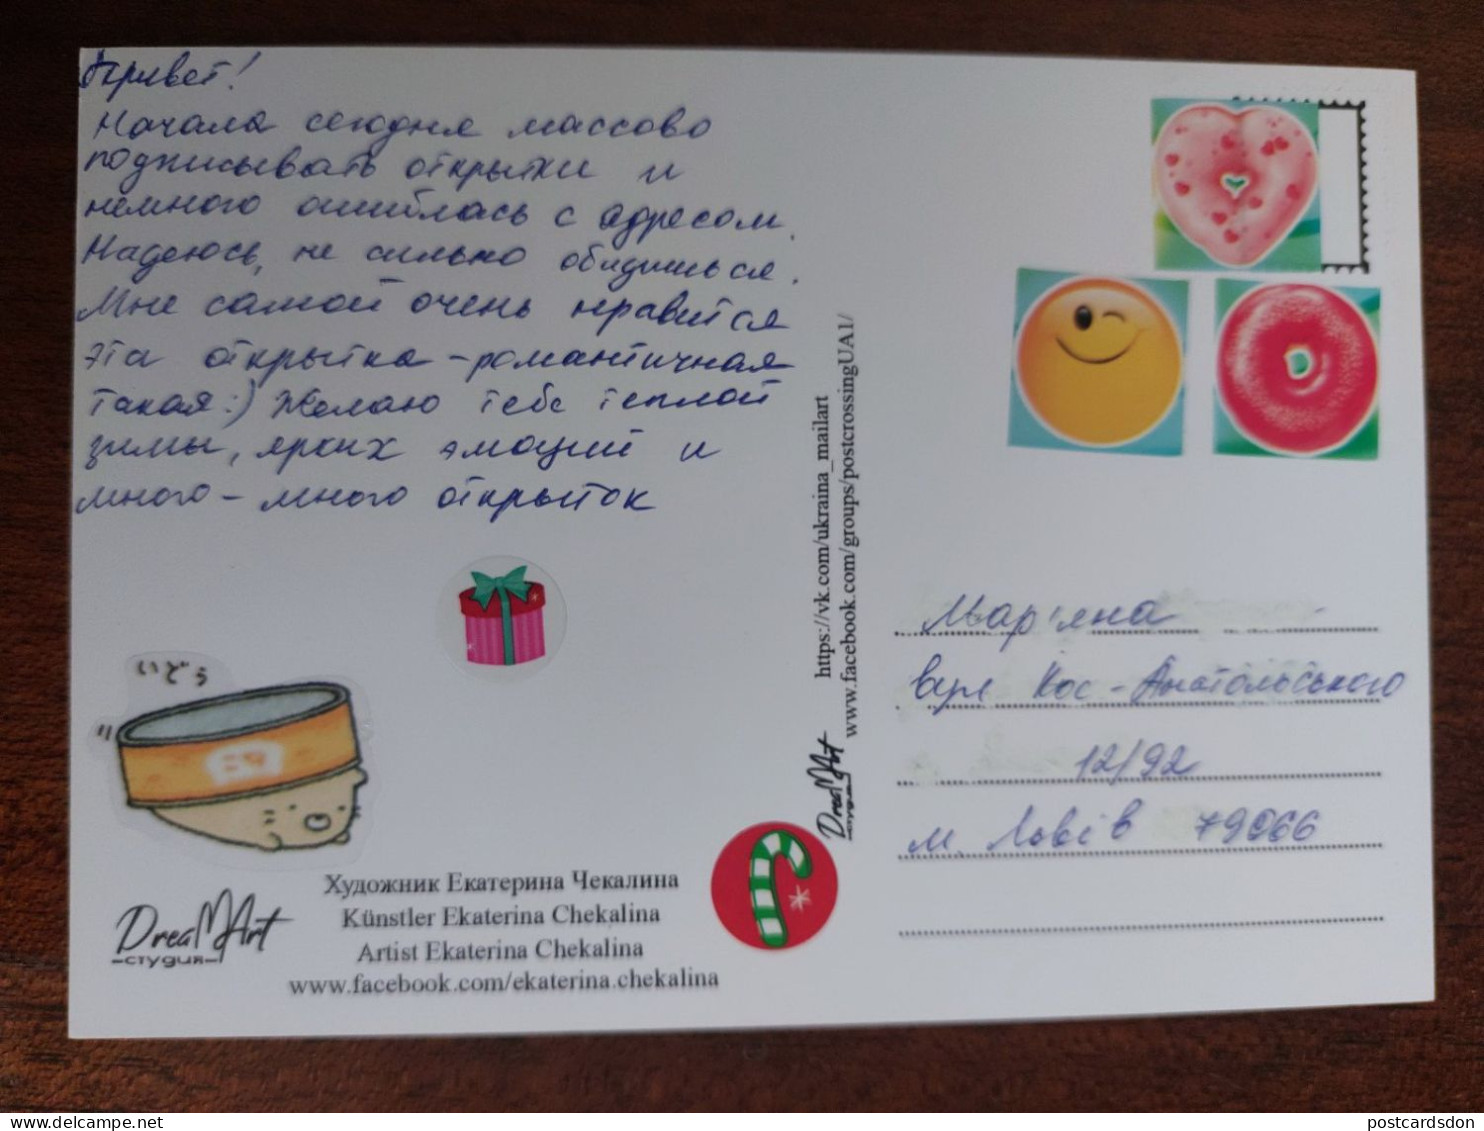 Illustrator Chekalina "Astronomer" - Modern Ukrainian Postcard - Postcrossing - 2010s / Telescope - Ukraine